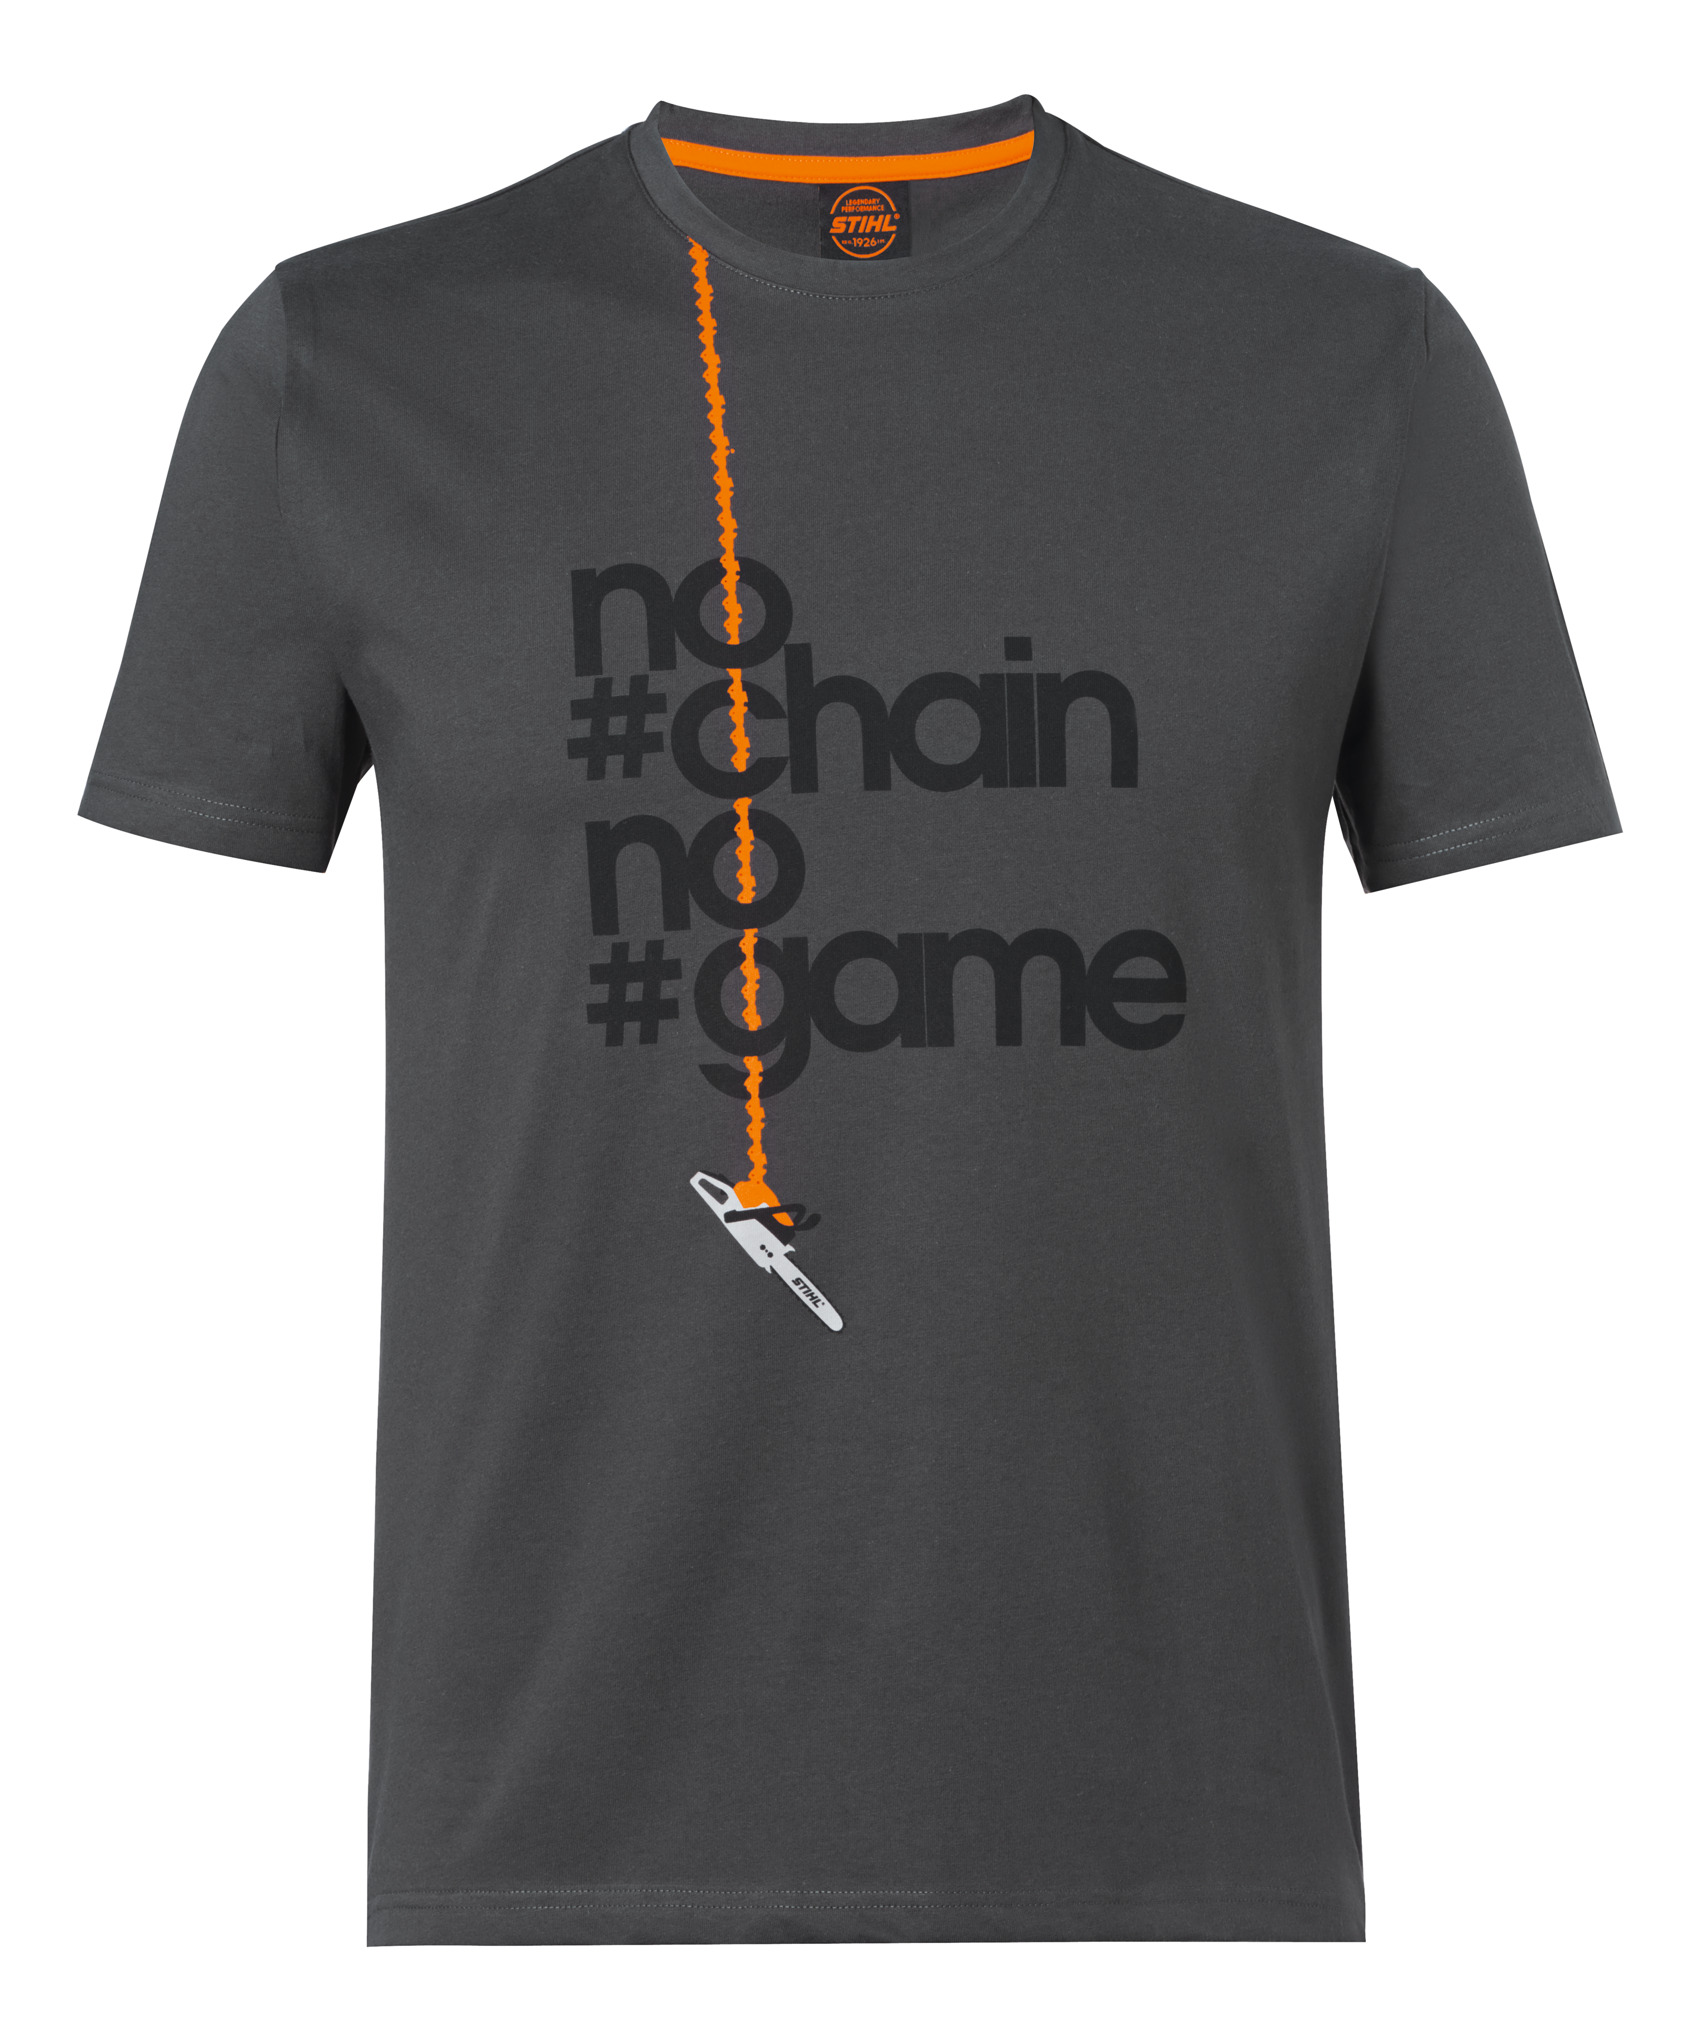 T-shirt "No chain"